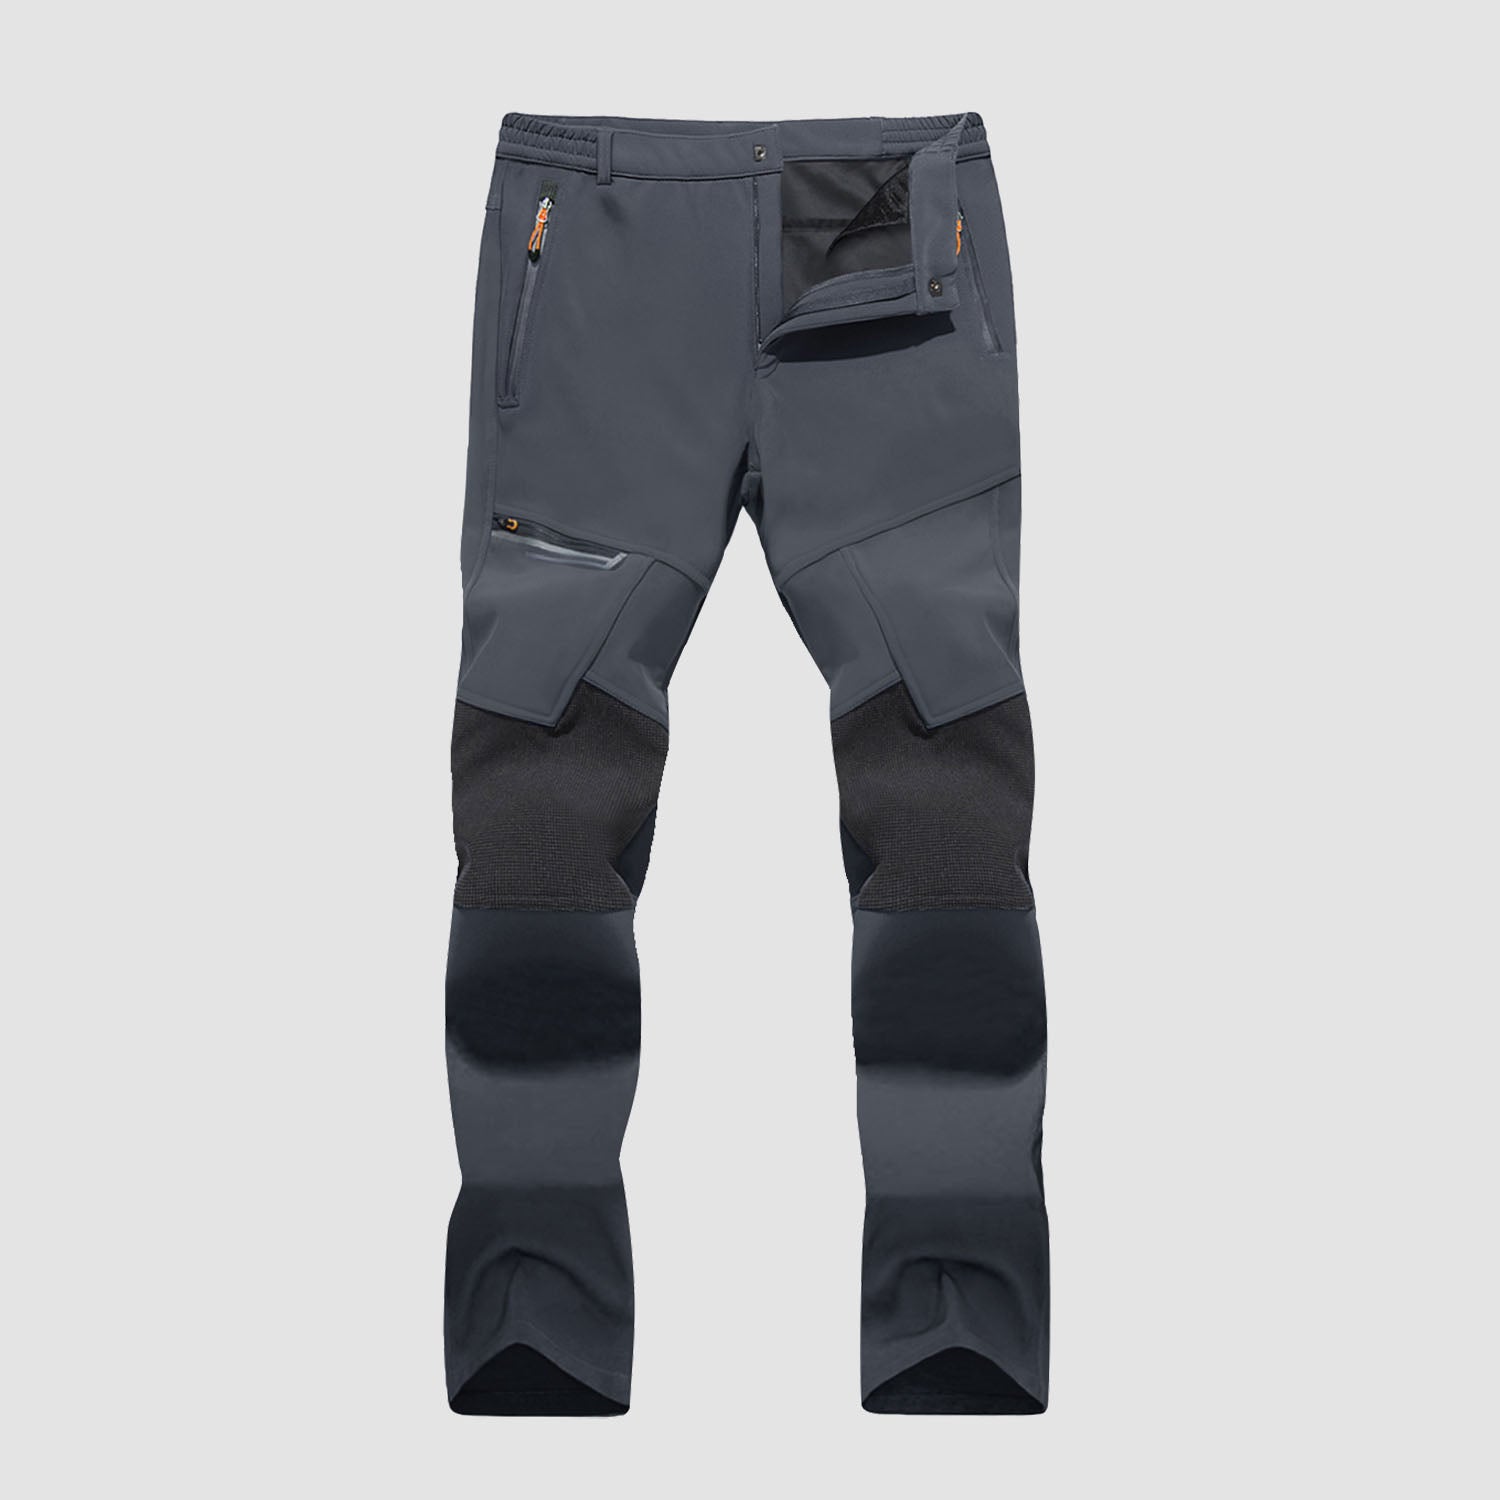 Men's Tactical Trekking Pants with Zipper Pockets Outdoor Ripstop Hiking Trousers